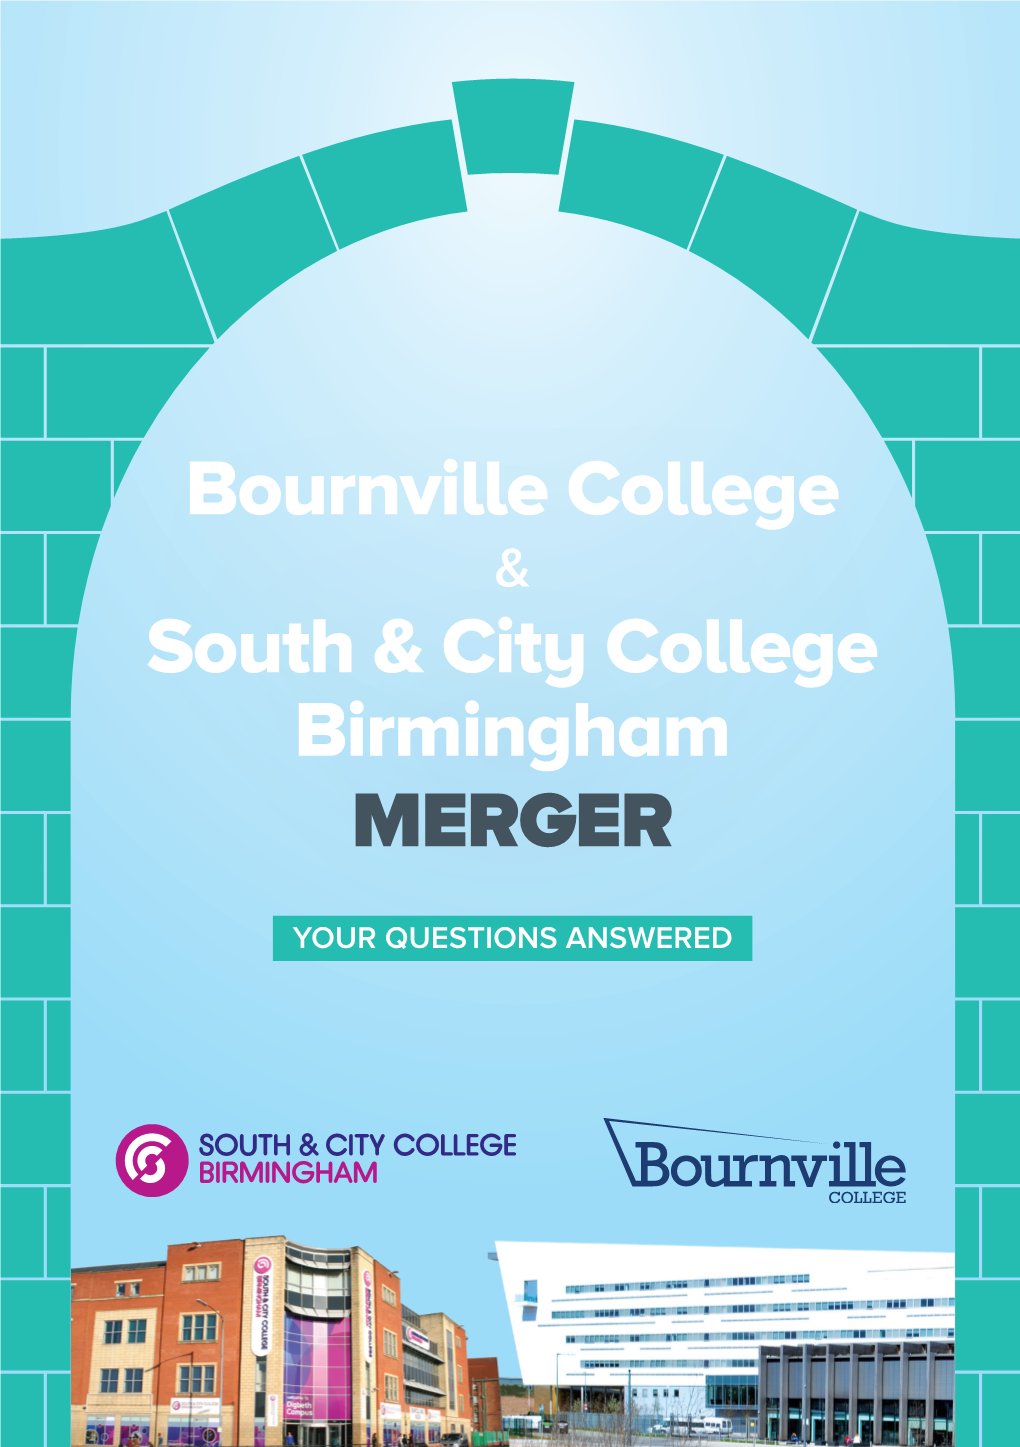 Bournville College & South & City College Birmingham MERGER